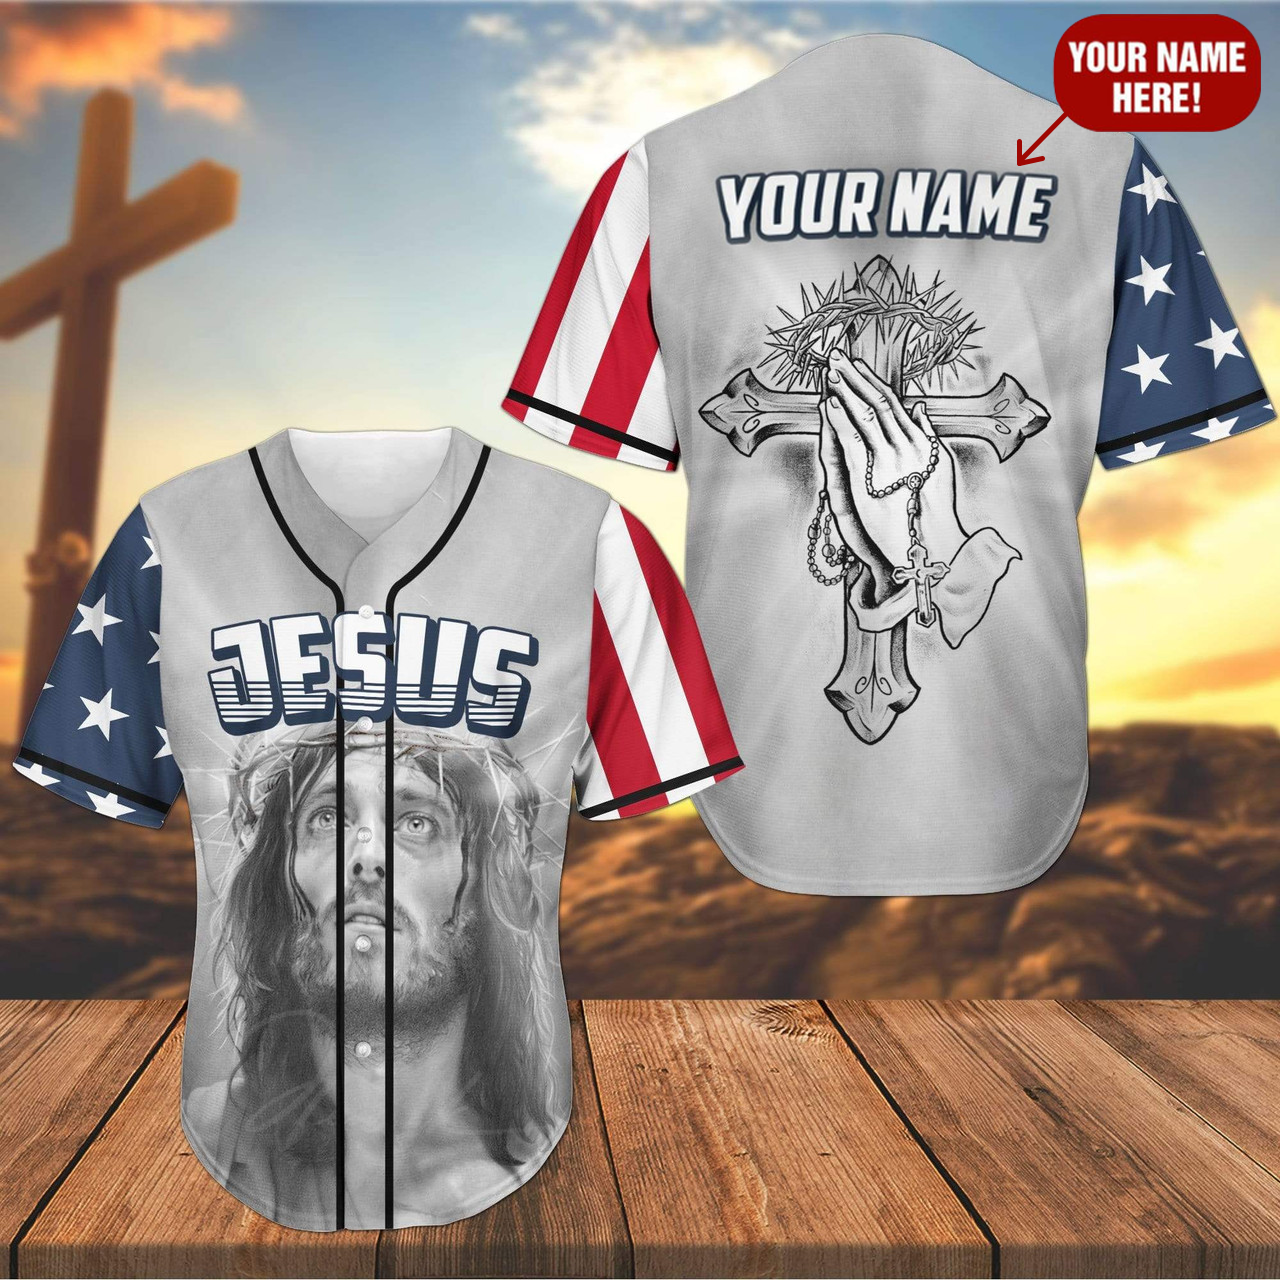 Personalized Jesus Baseball Jersey - Cross, Christ, Pray Baseball Jersey - Gift For Christians - The Savior Custom Baseball Jersey Shirt For Men Women